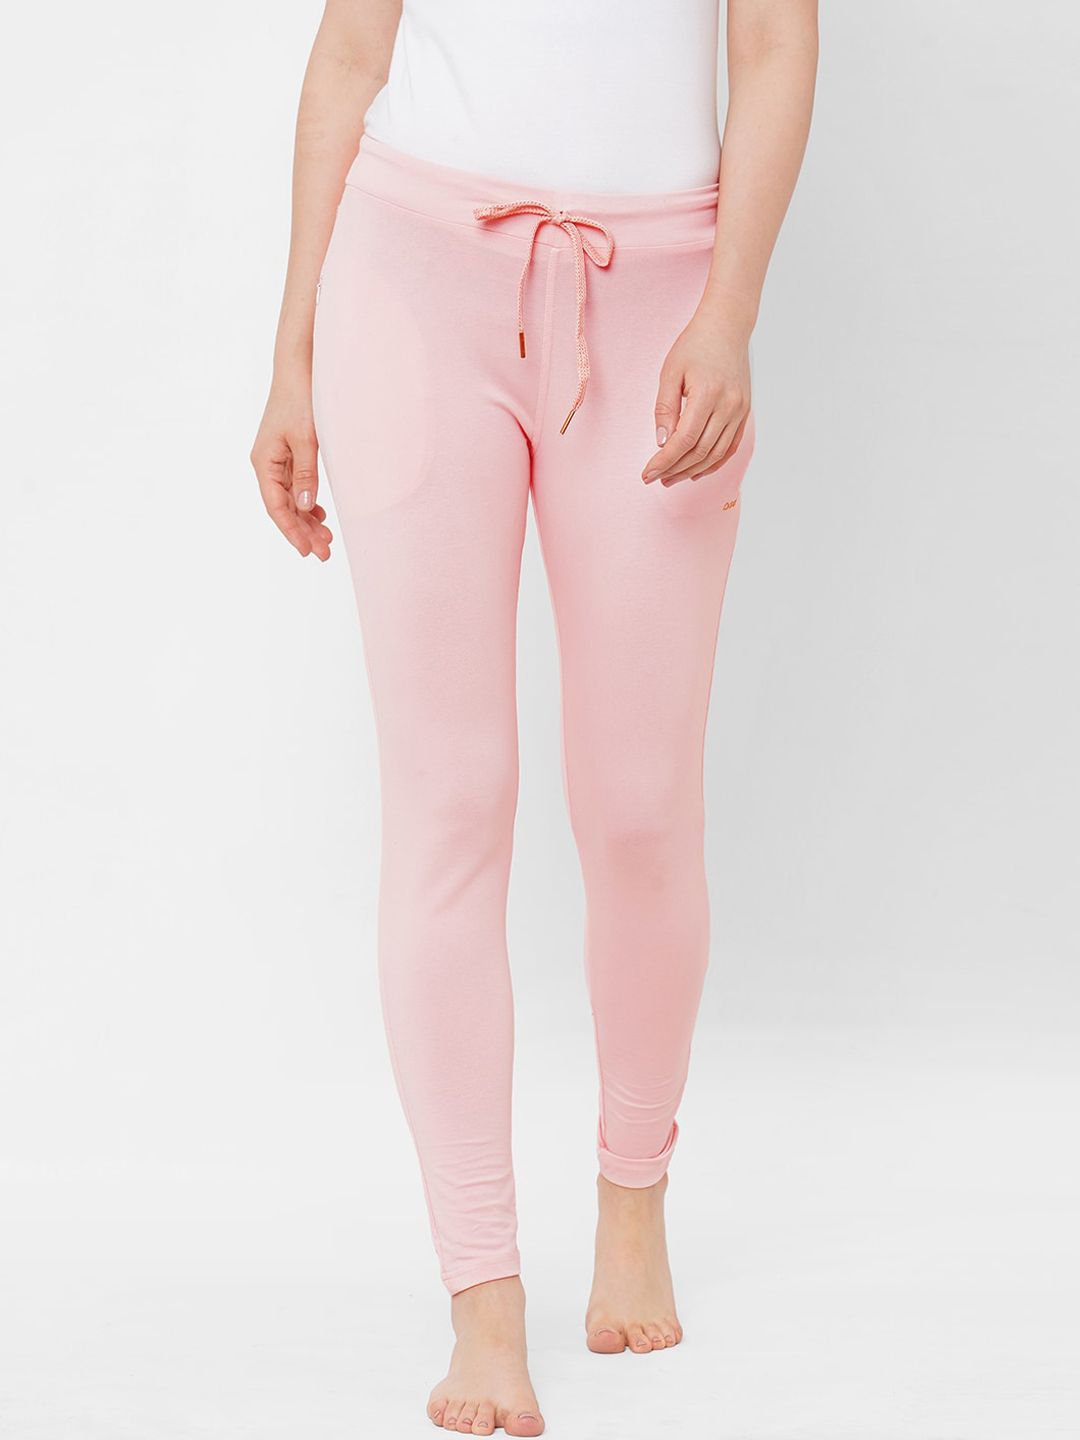 Sweet Dreams Women Pink Solid Cotton Pyjamas Price in India